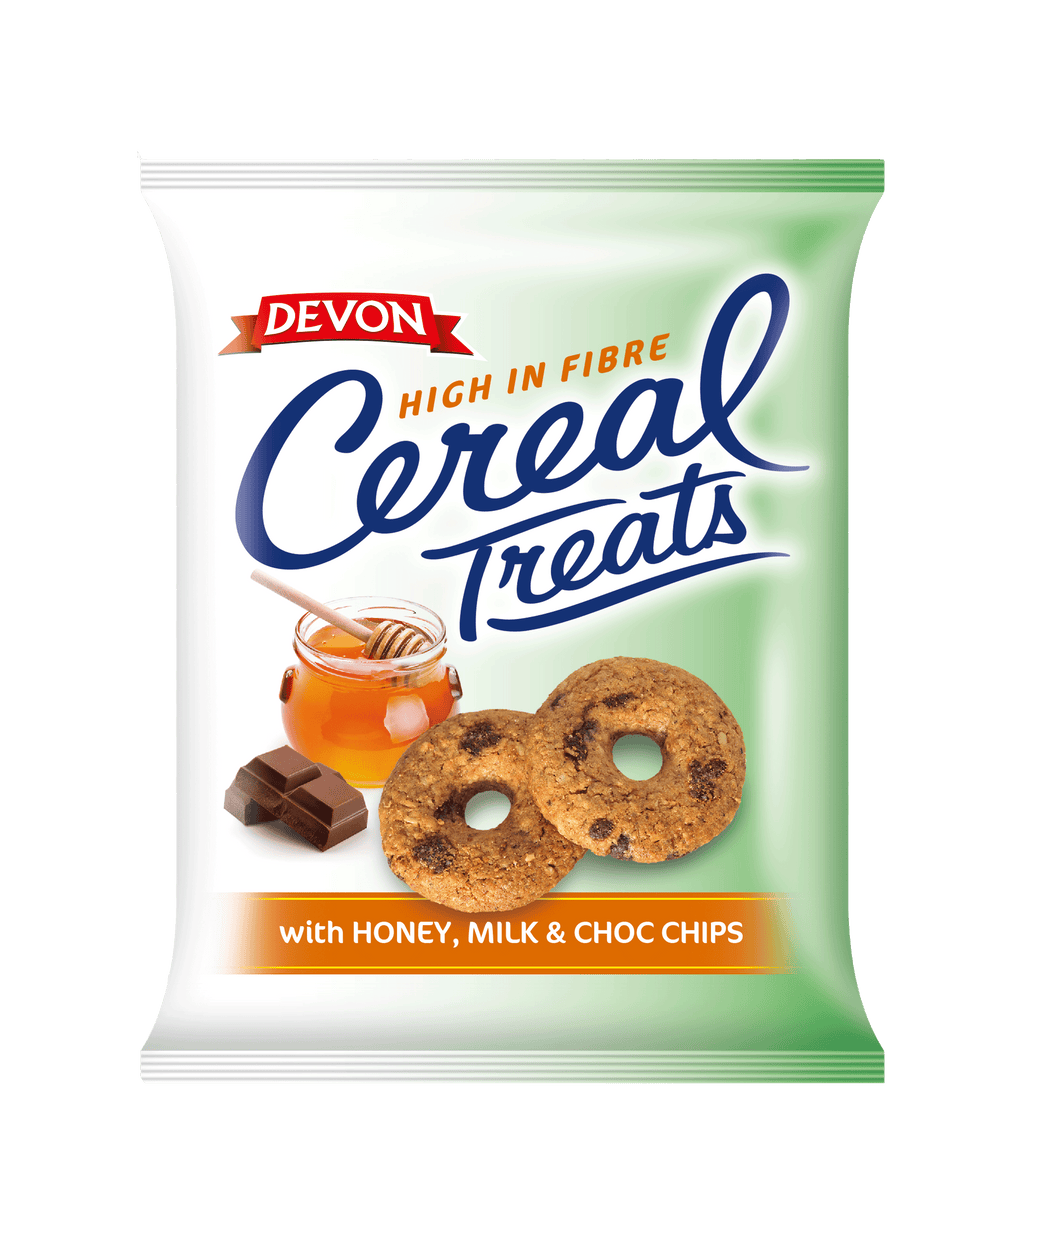 Devon Healthline Cereal Treats 50g